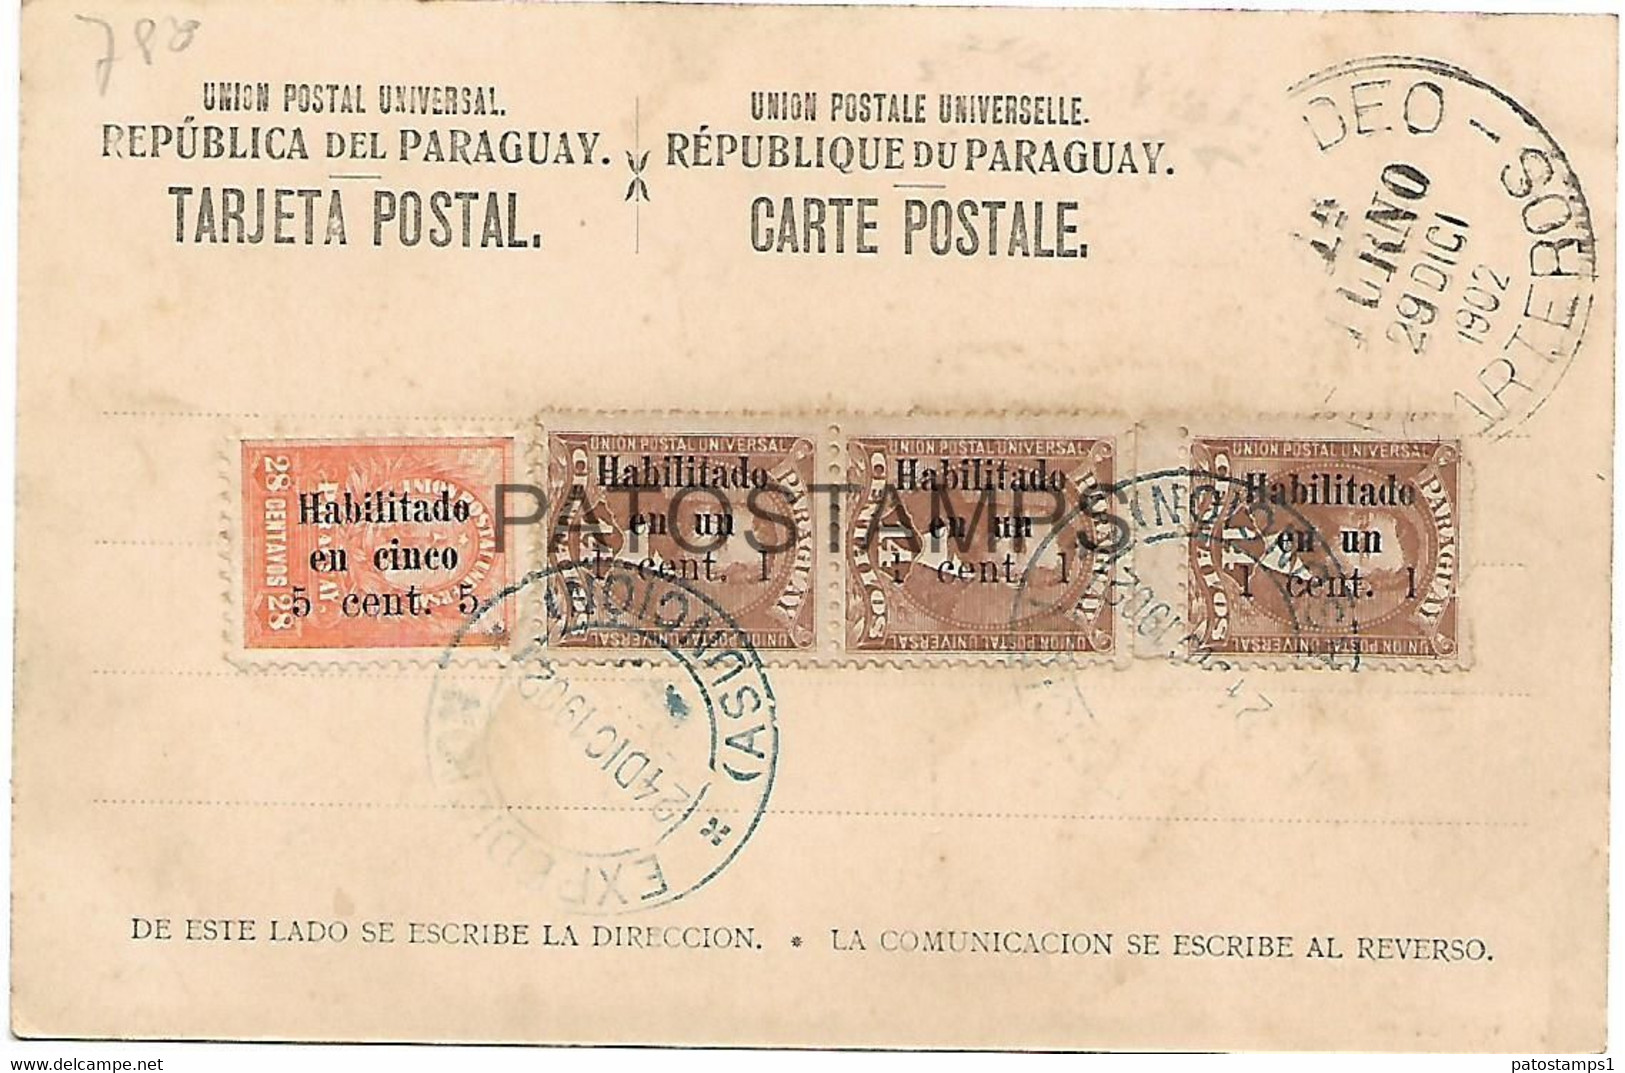 143010 PARAGUAY SAN BERNARDINO COSTA DEL LAGO IPACARAY YEAR 1902 POSTAL POSTCARD - Paraguay